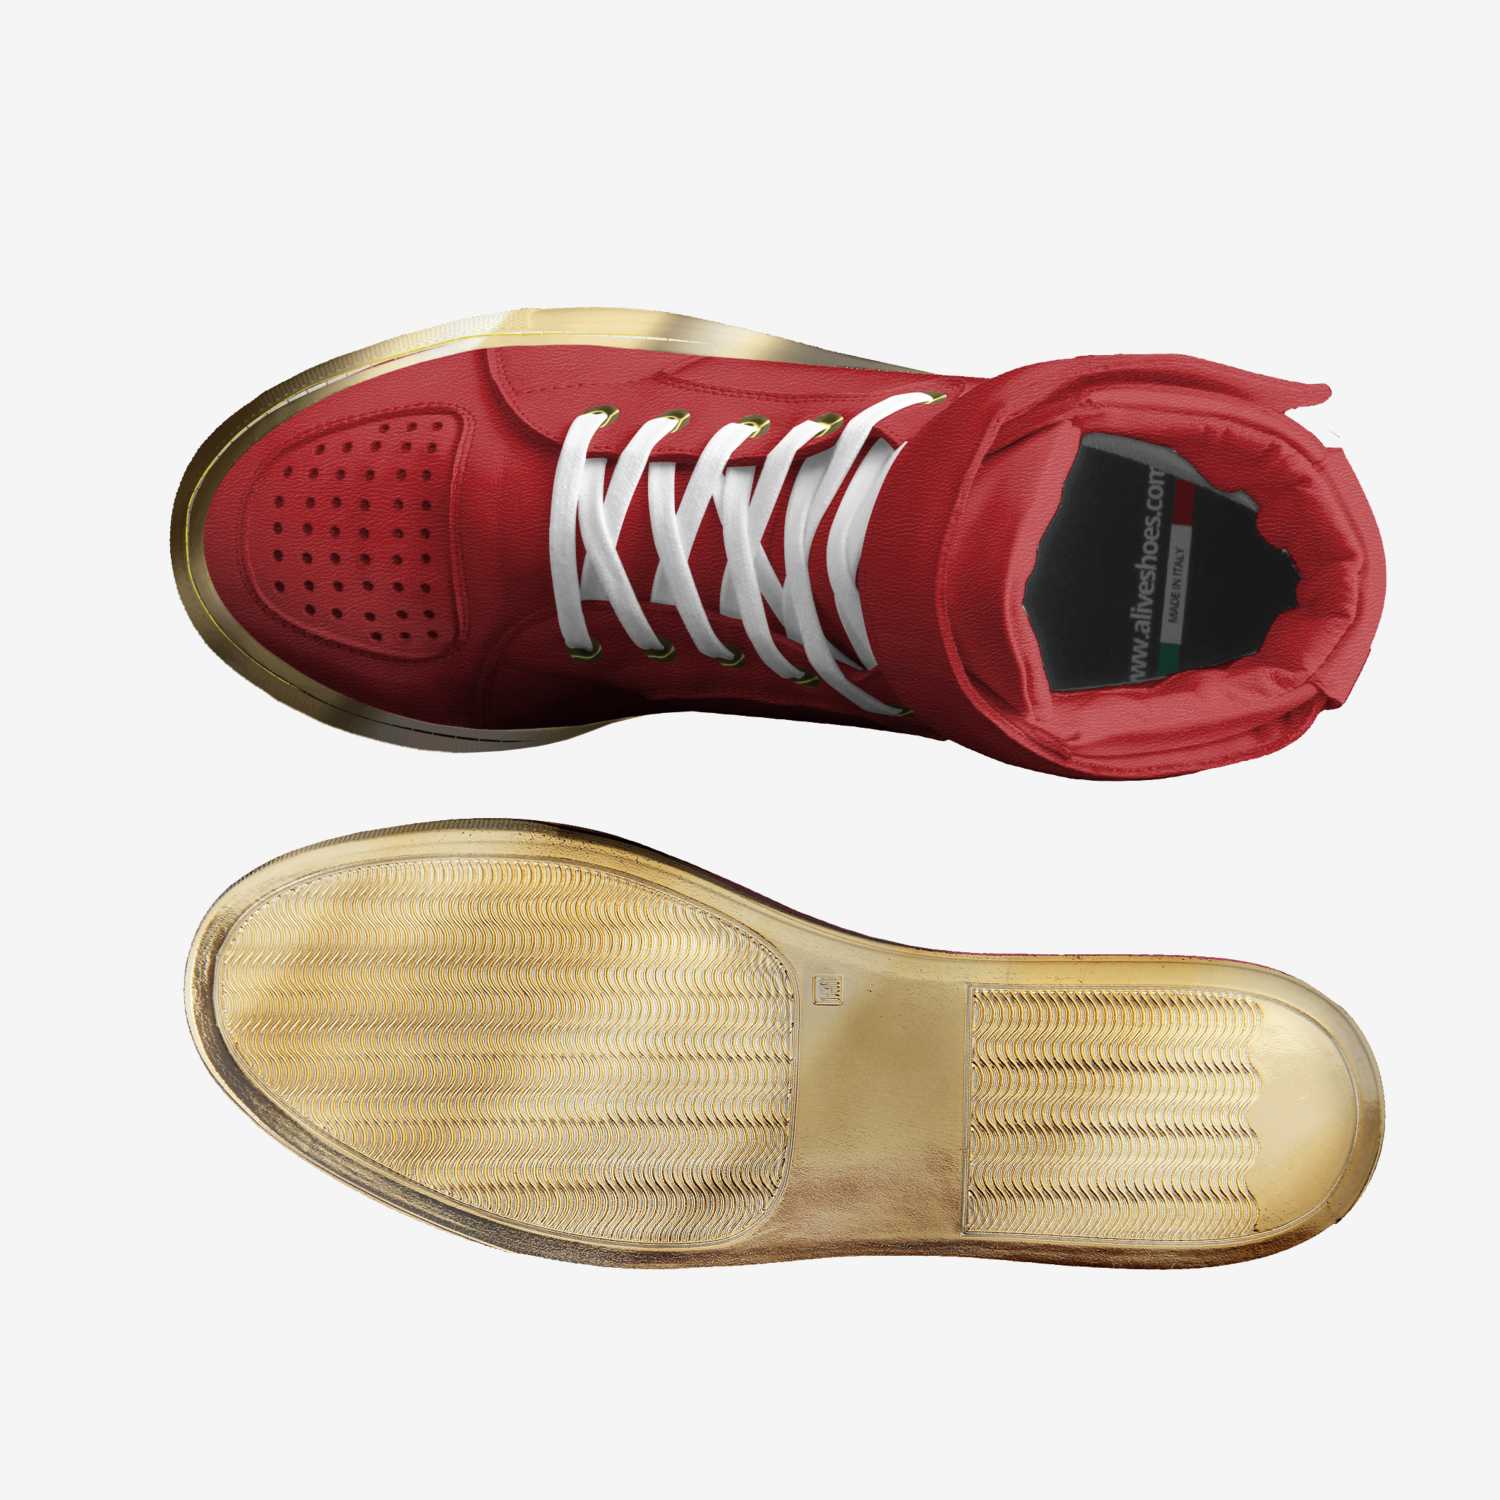 Rego | A Custom Shoe concept by Monica Yessel Aguilar Martinez